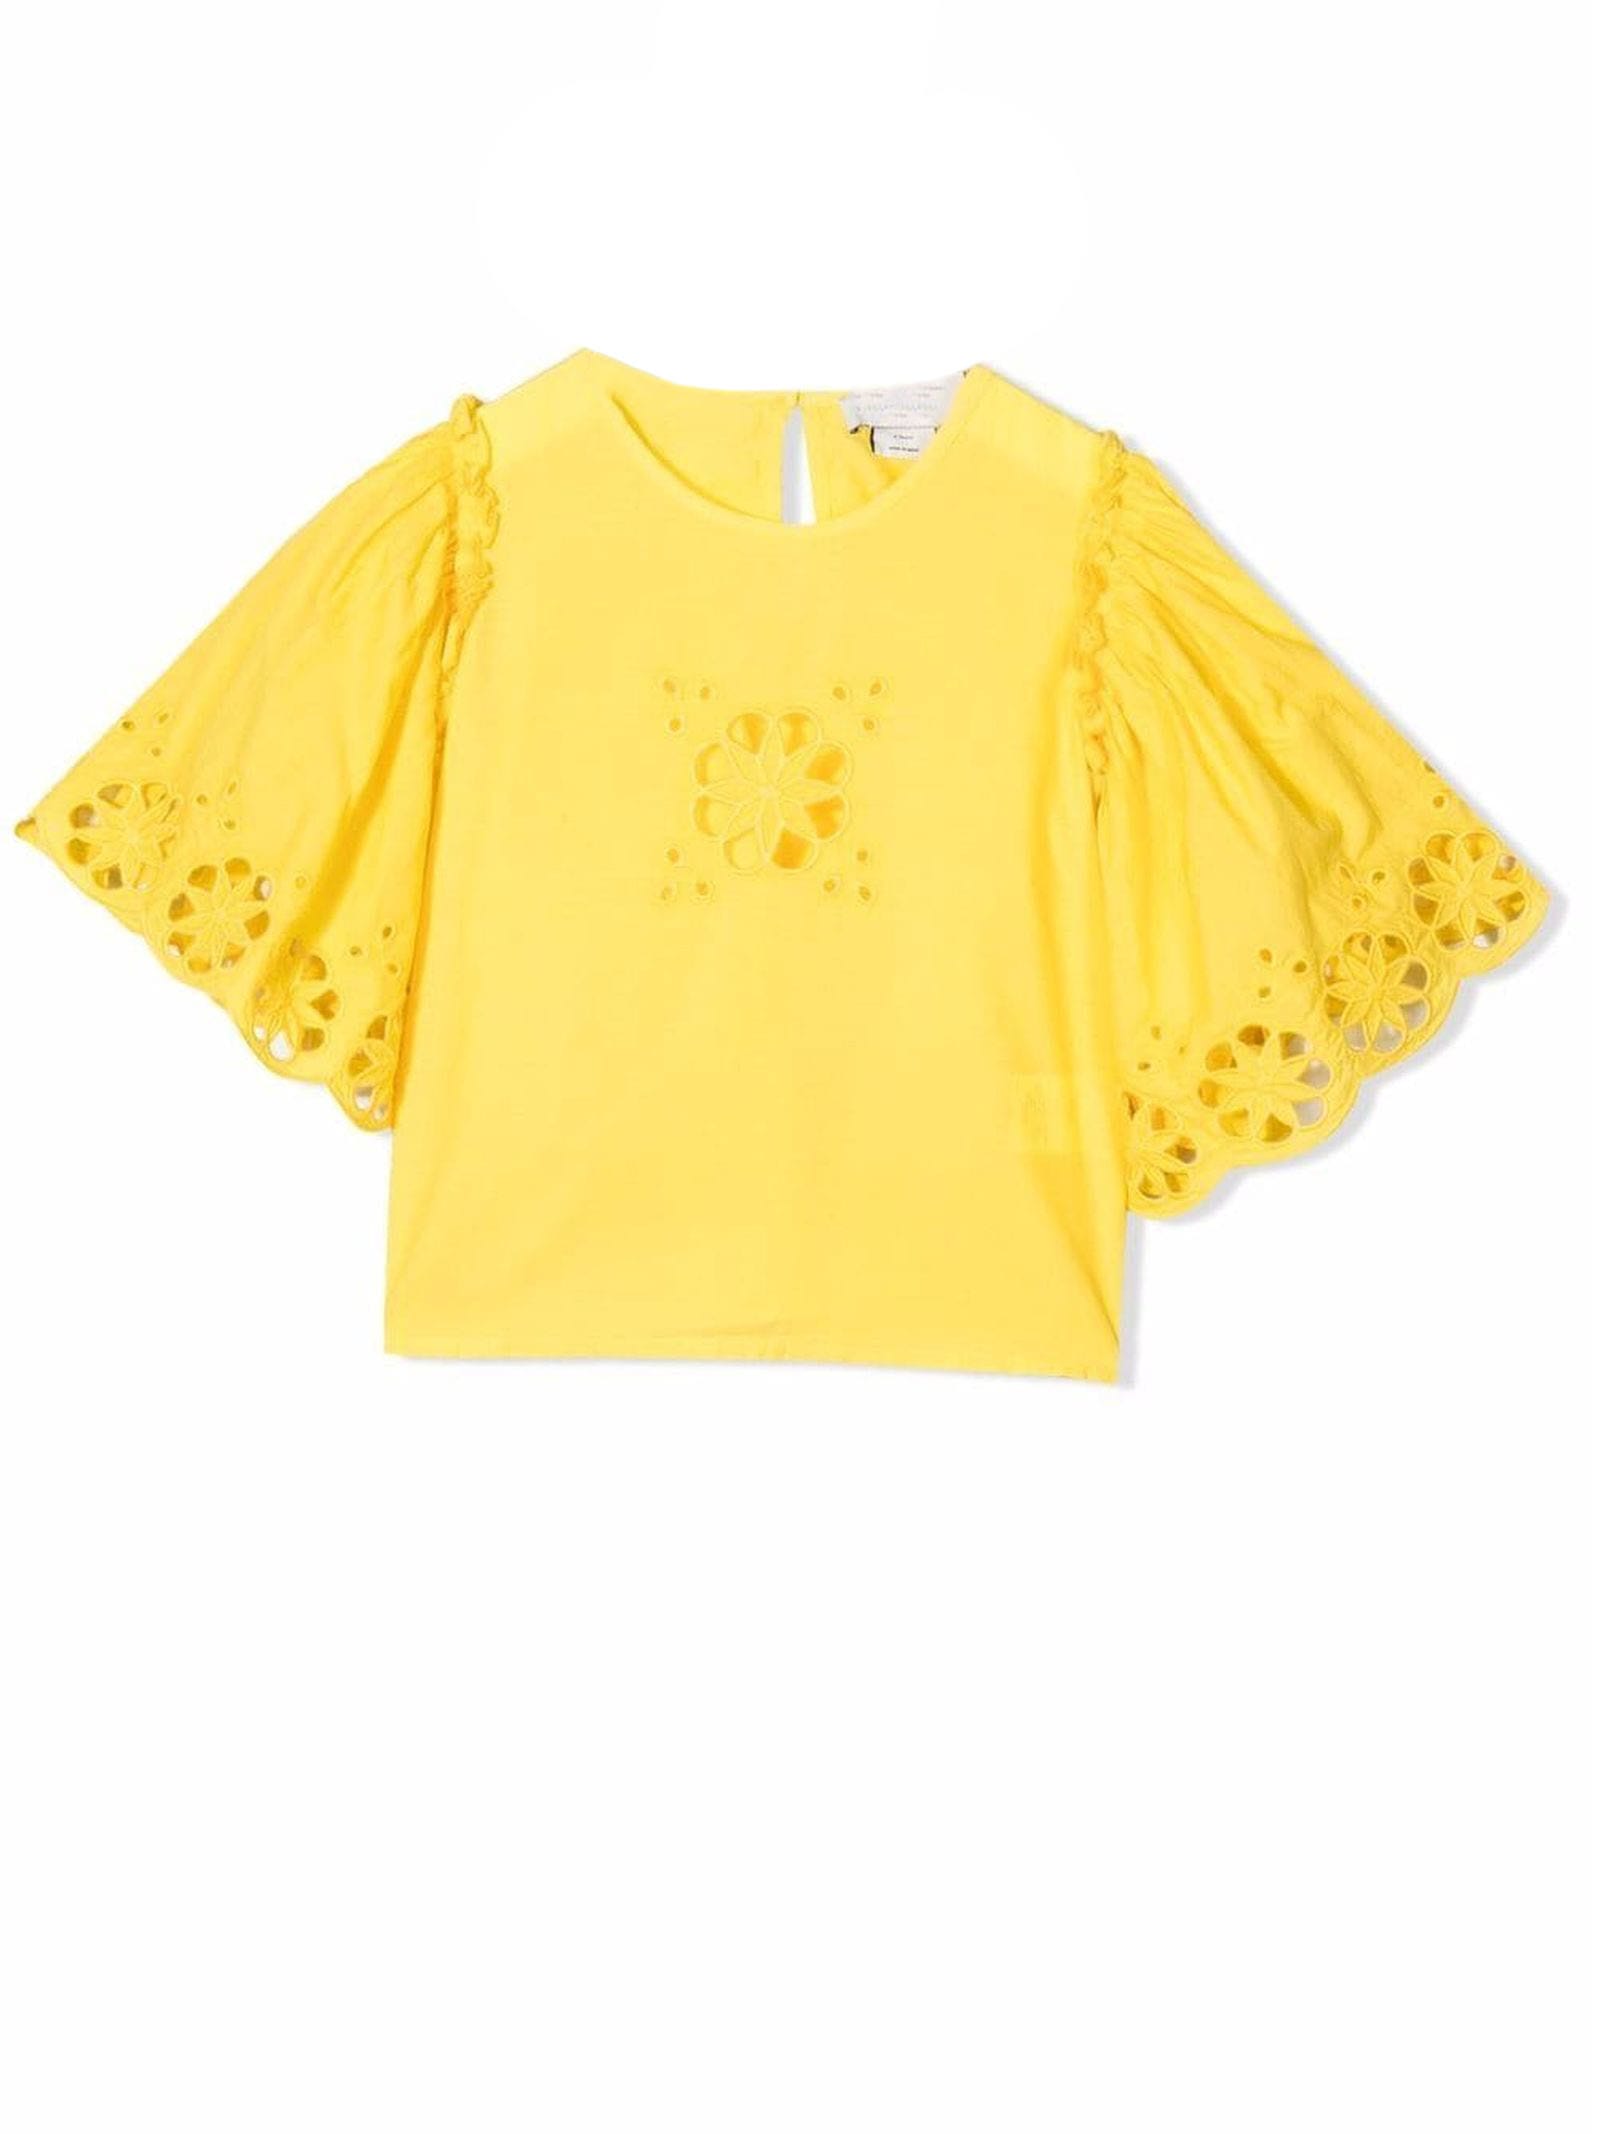 Stella McCartney Kids Yellow Cotton Tshirt